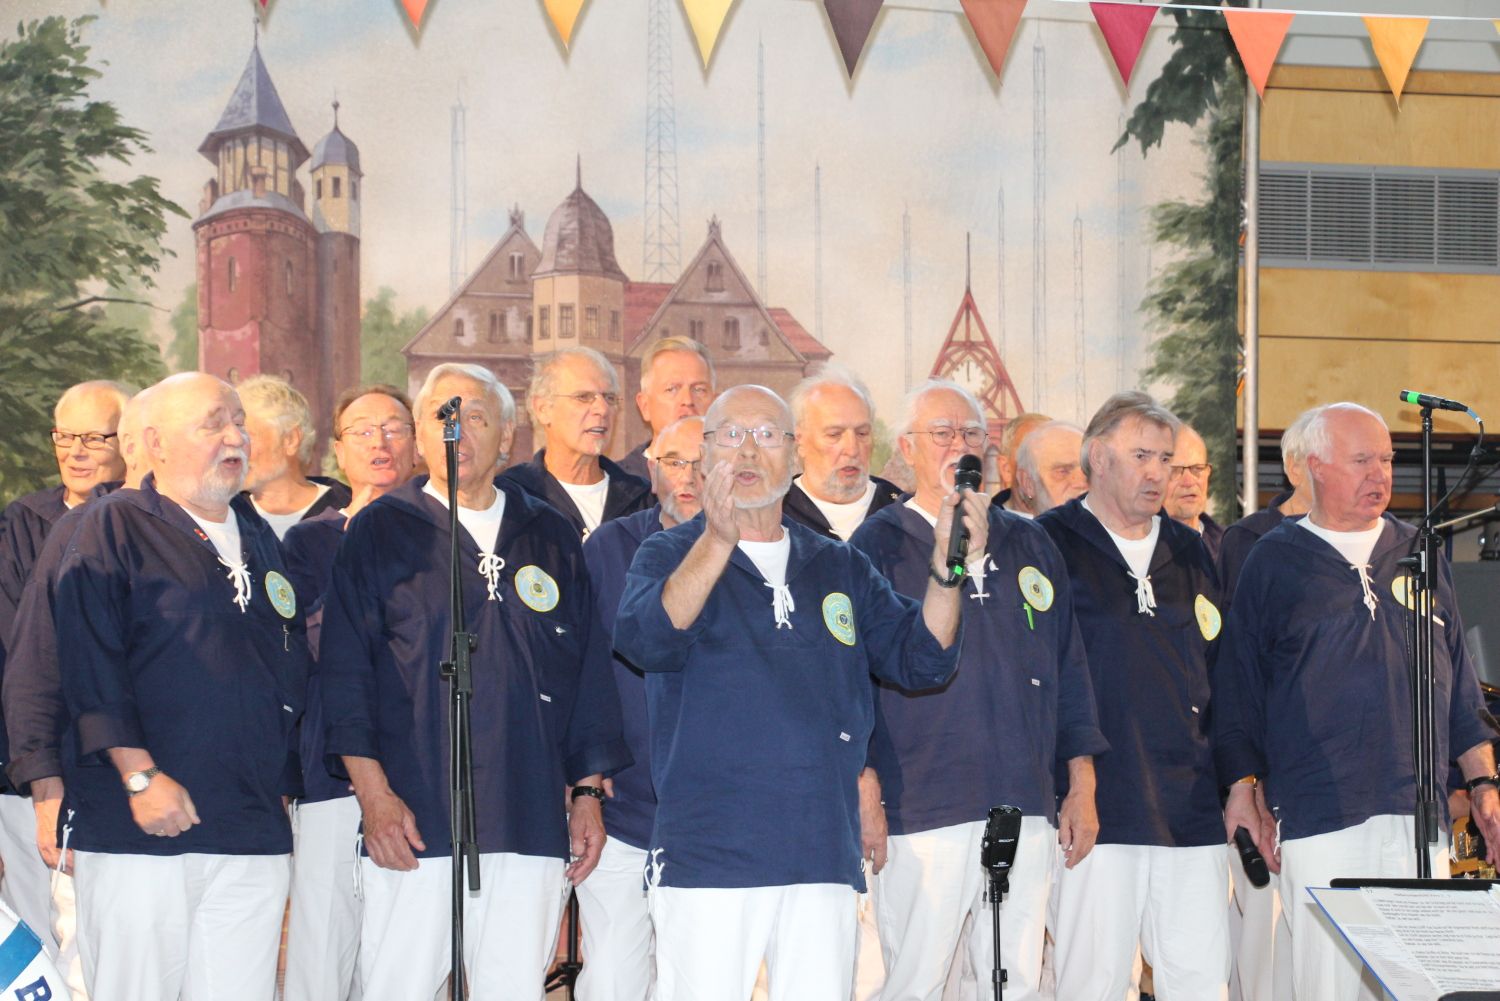 Singen vor historischer Stadtkulisse: Shanty-Chor Berlin e.V. in Königs Wusterhausen